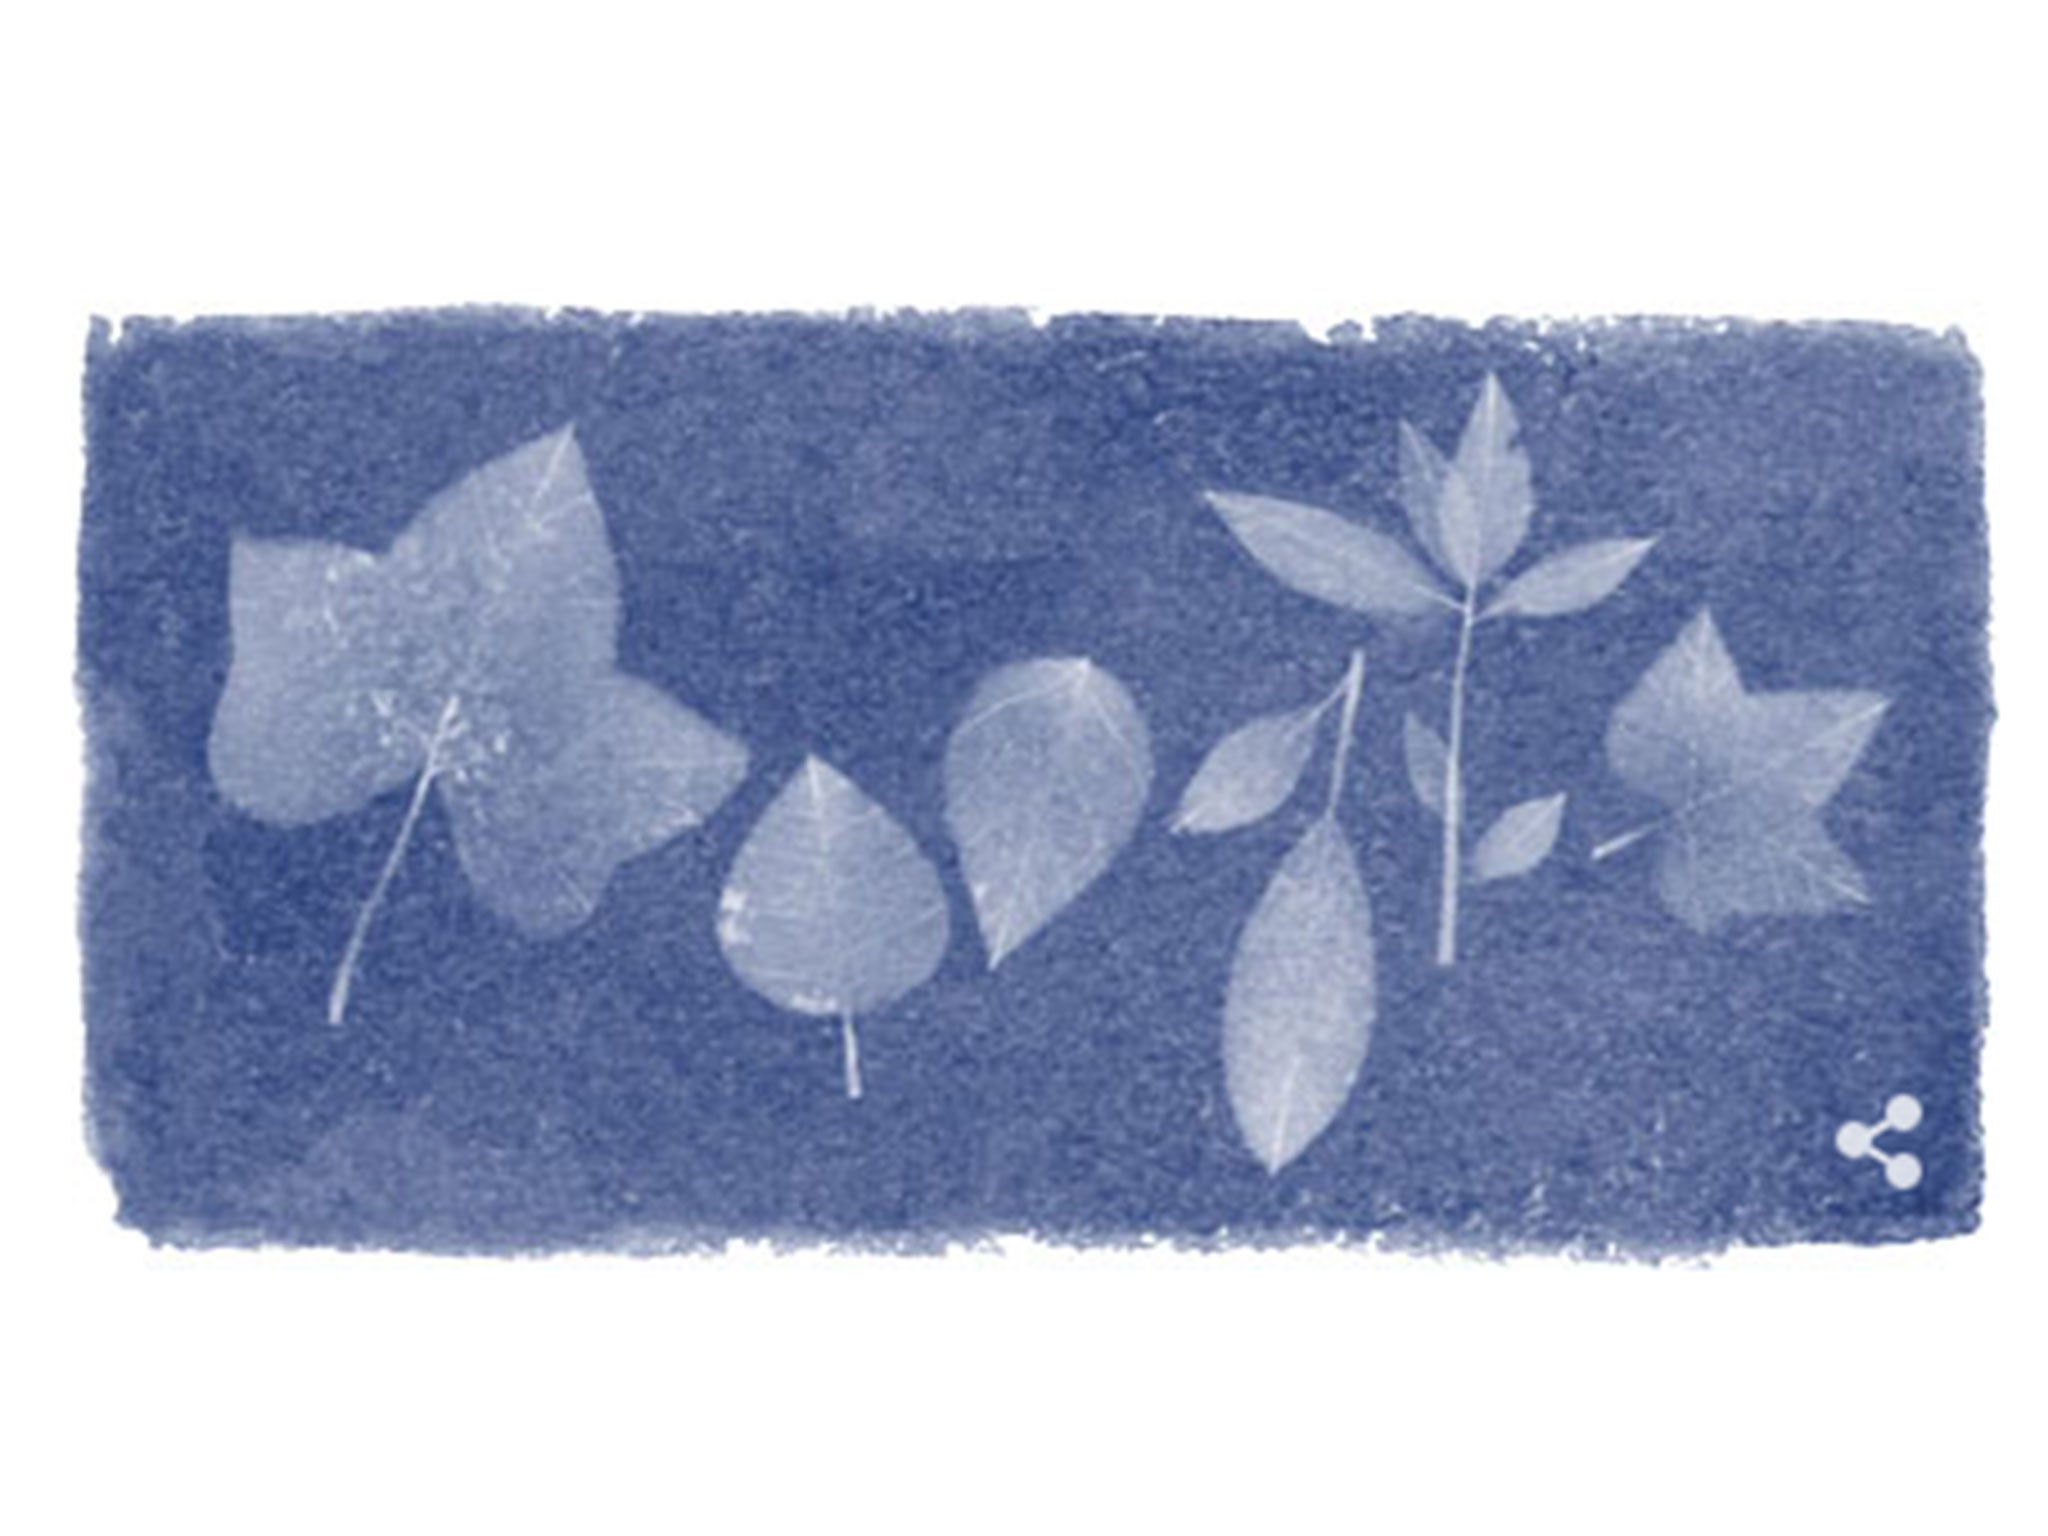 Google celebrates the 216th birthday of Anna Atkins, botanist and photographic pioneer